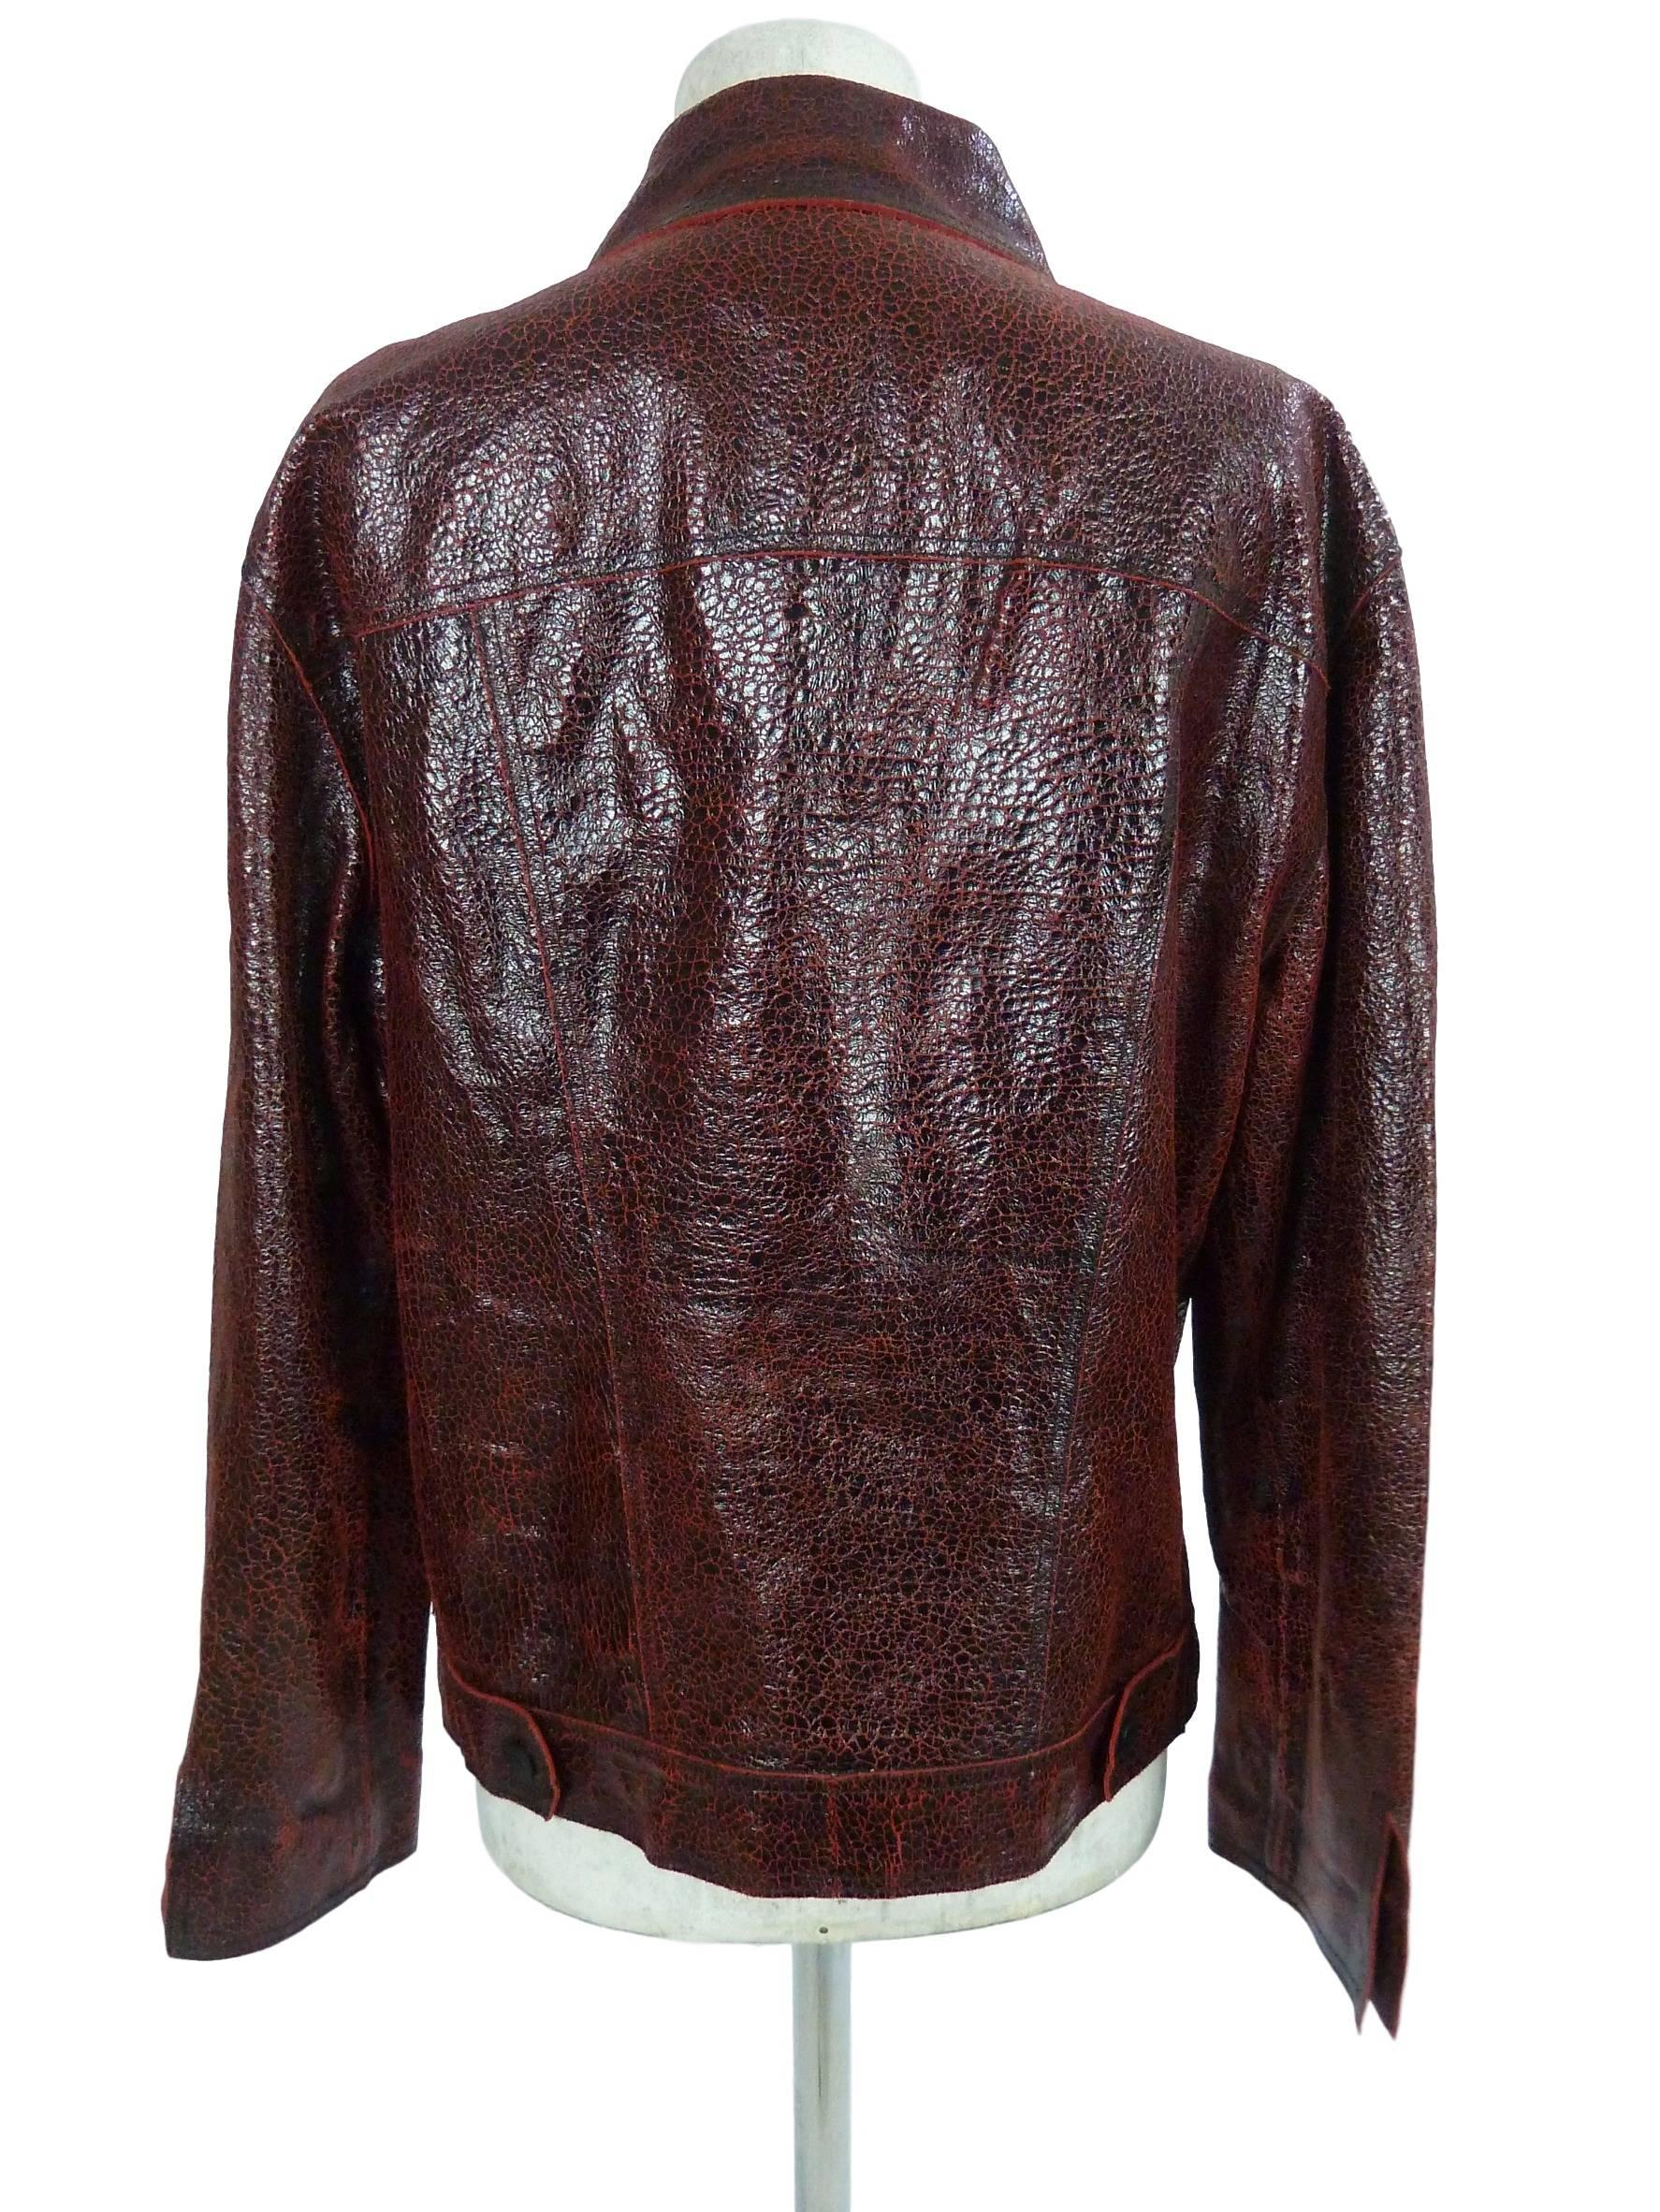 Black Roberto Cavalli leather jacket men motorcycle plum wine sz L luxury bordeaux